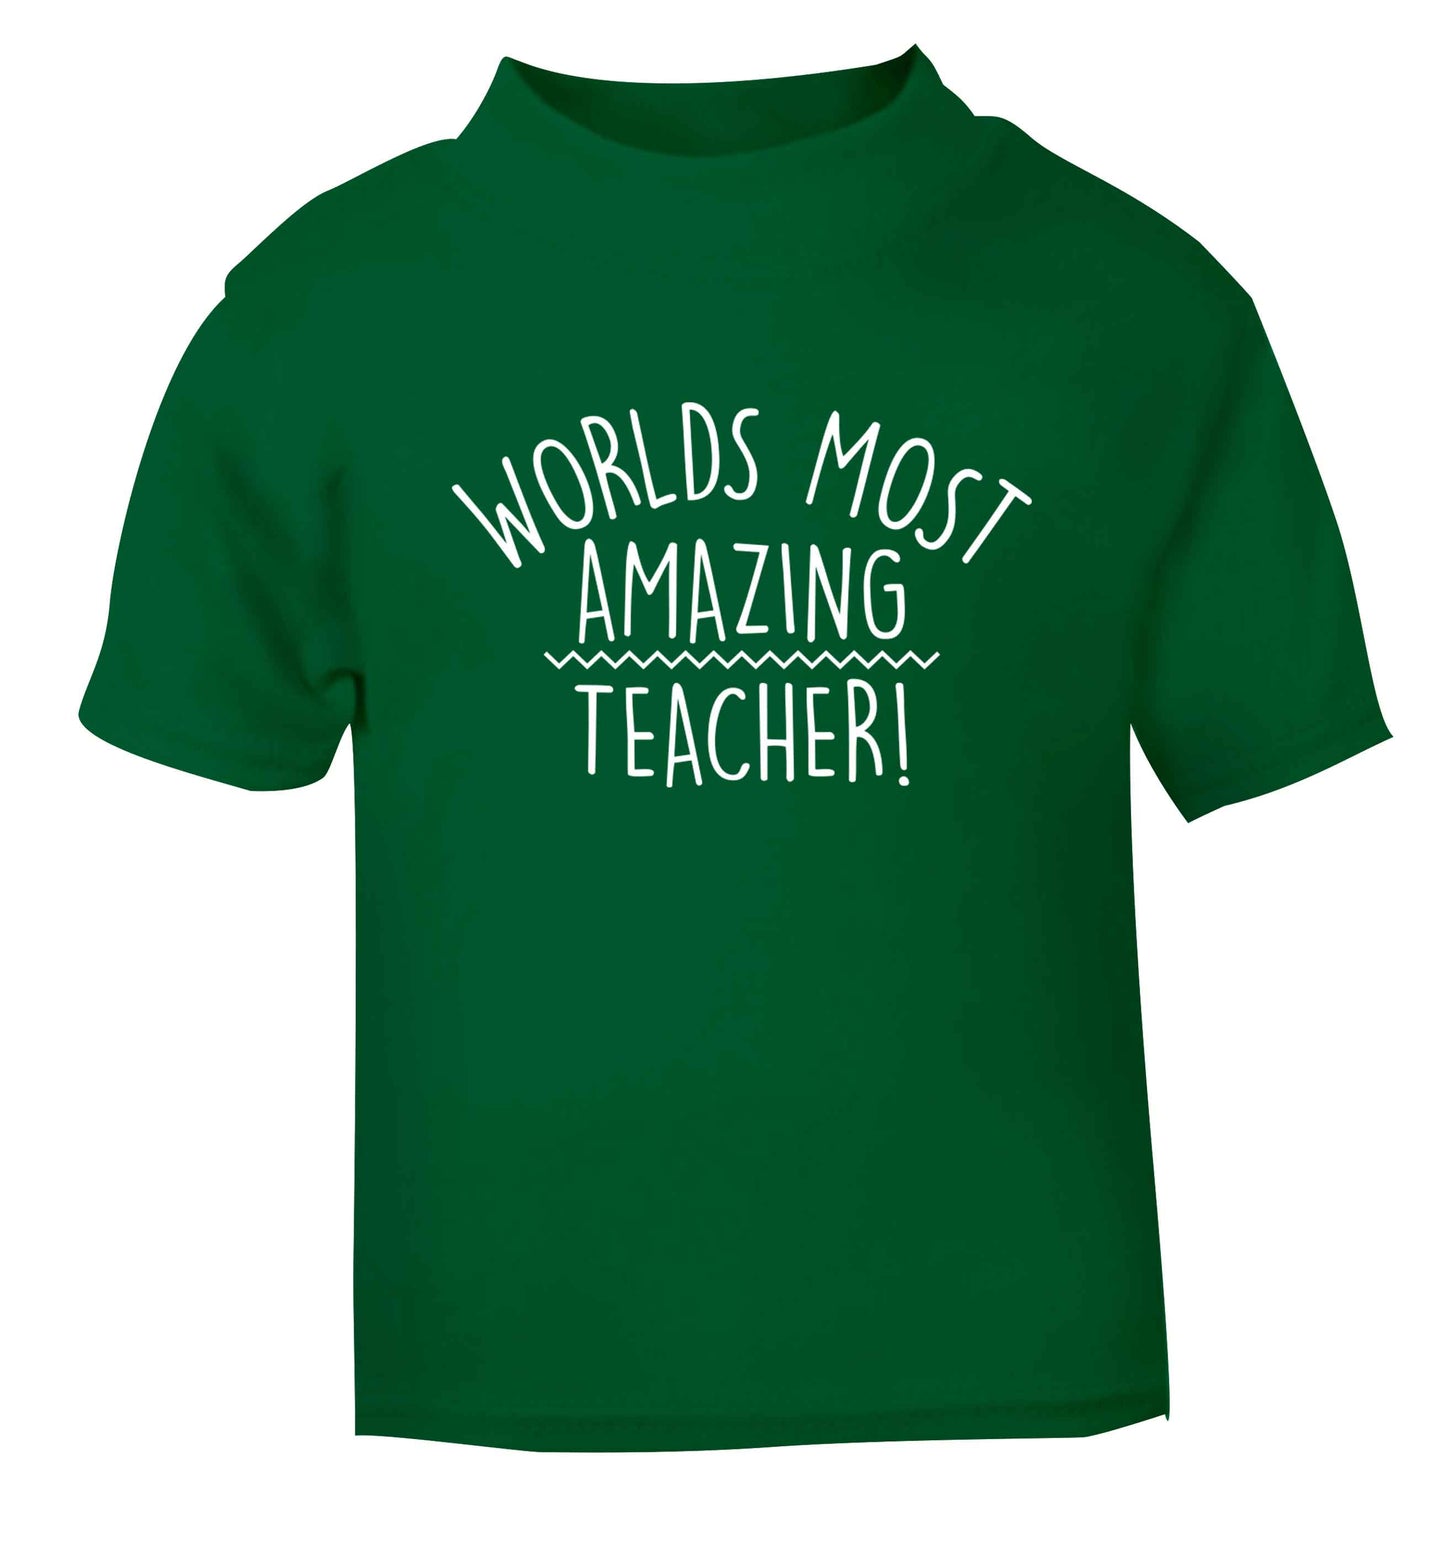 Worlds most amazing teacher green baby toddler Tshirt 2 Years